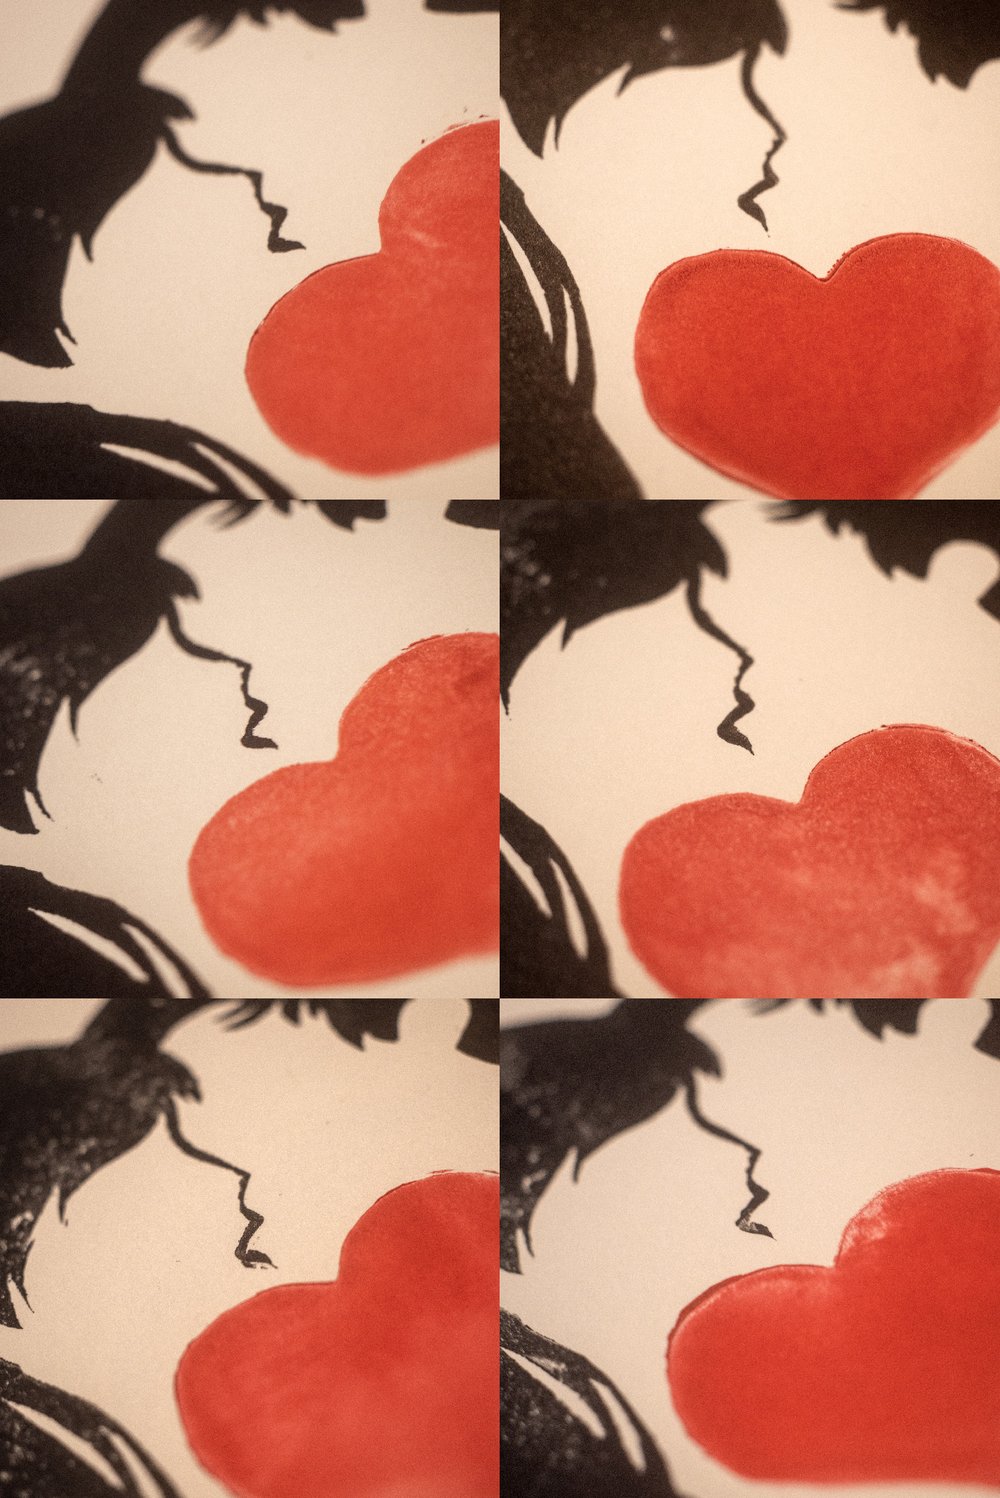 Image of "Heart kiss" Handmade exclusive lino print